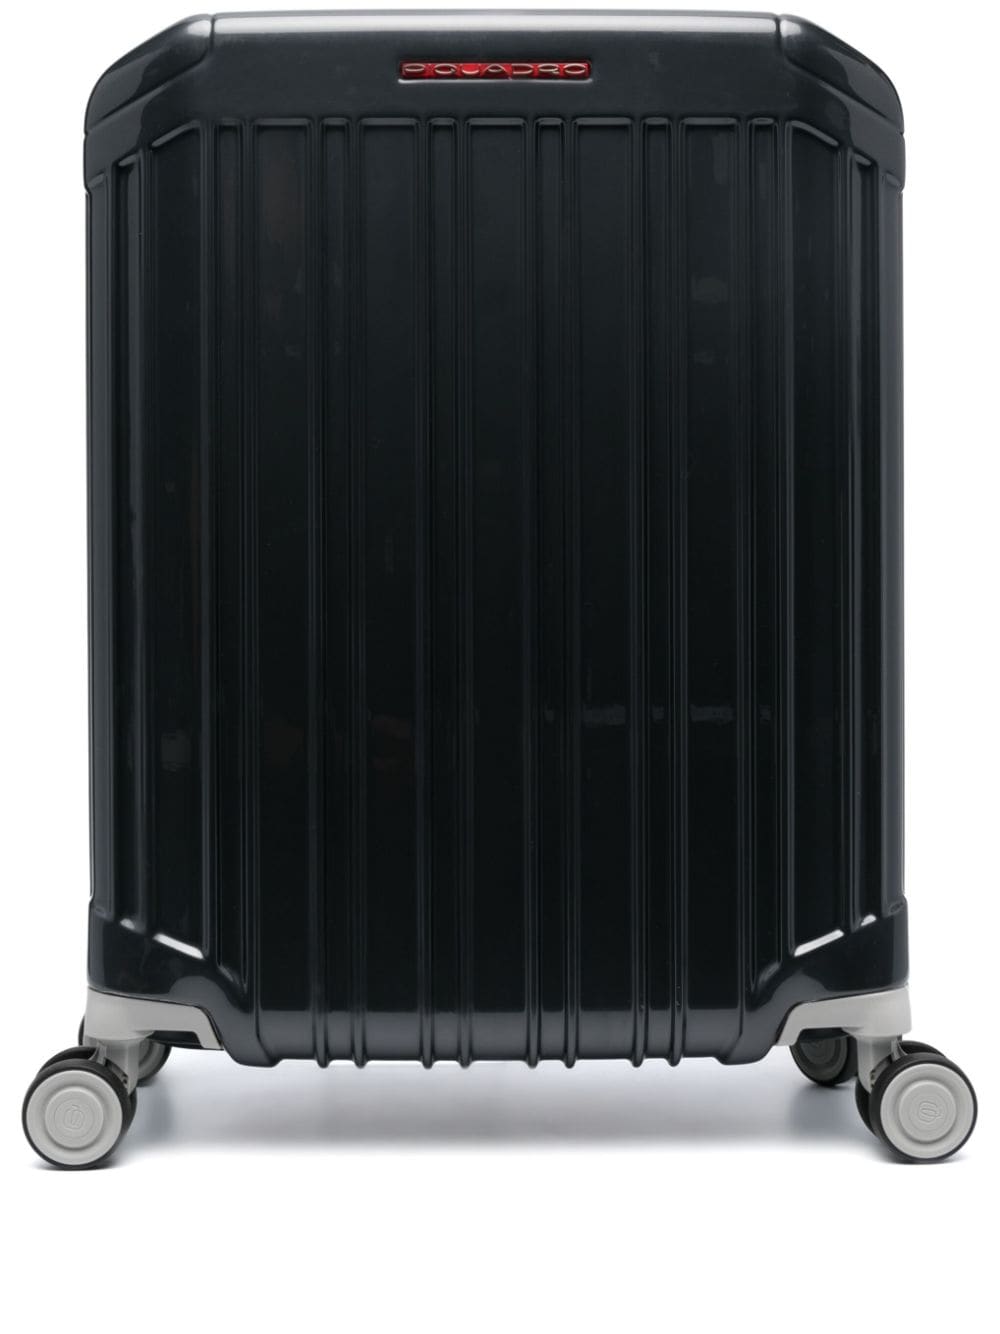 PIQUADRO hardside spinner cabin suitcase - Grey von PIQUADRO